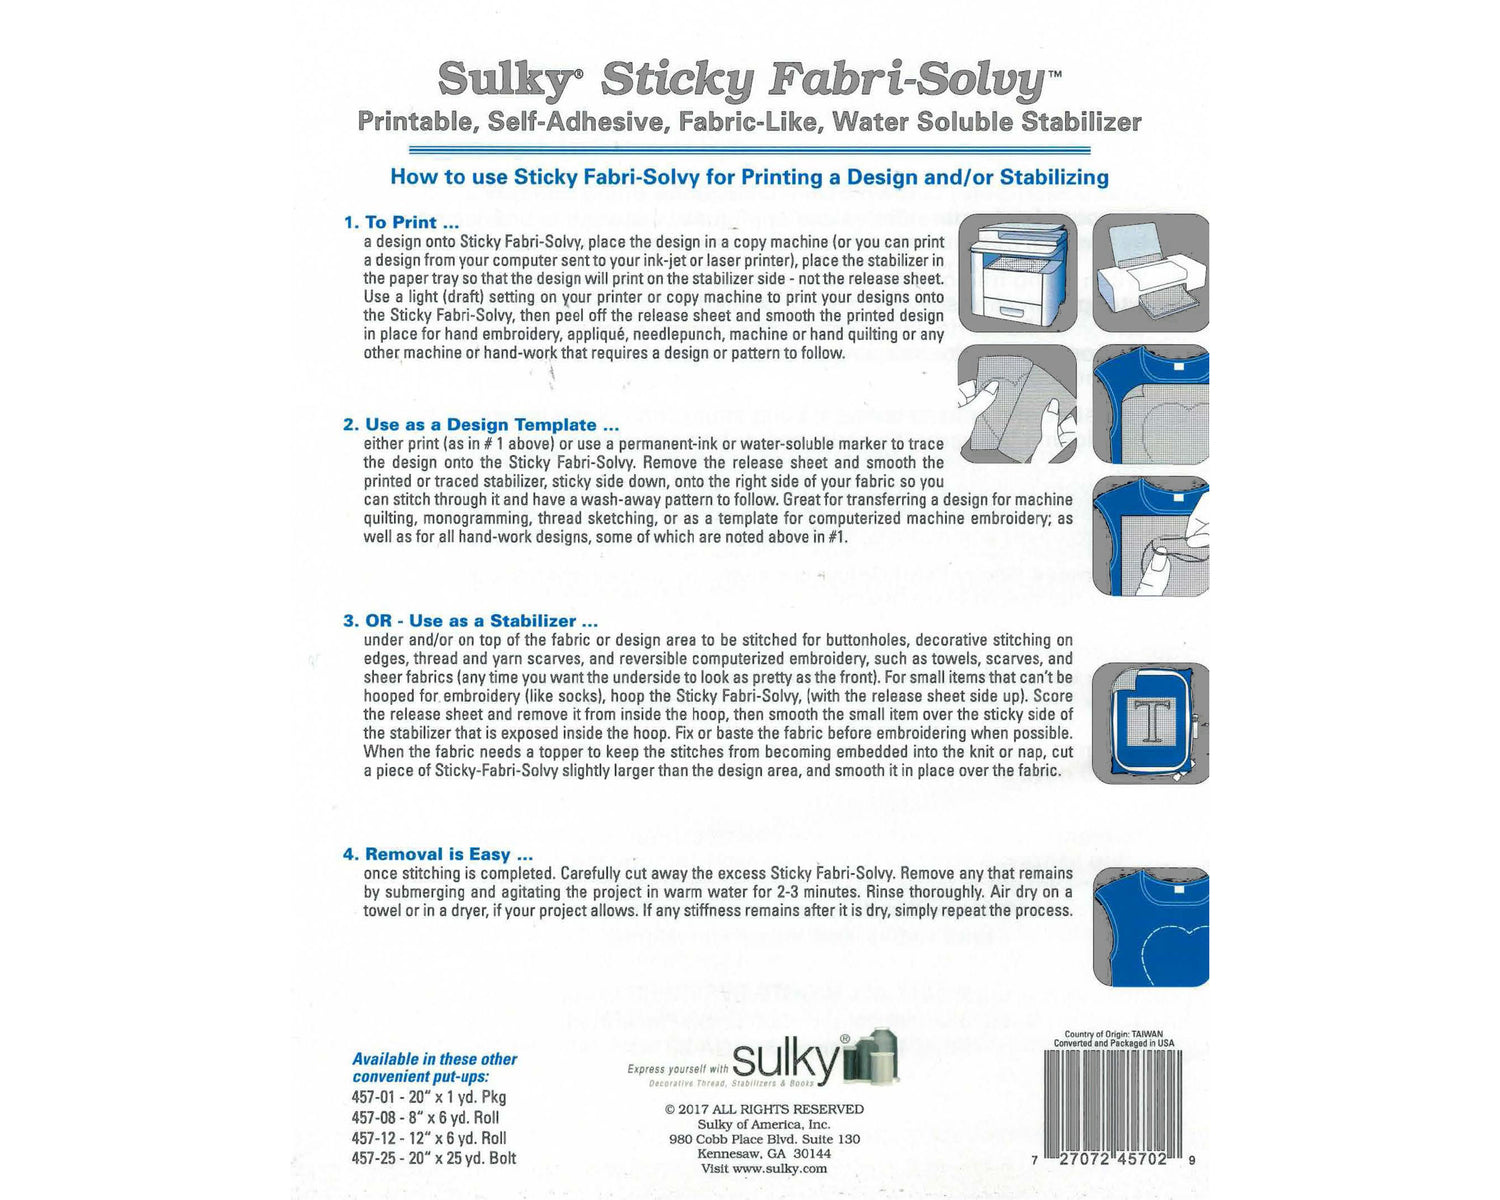 Sulky Sticky Fabri-Solvy Stabilizer